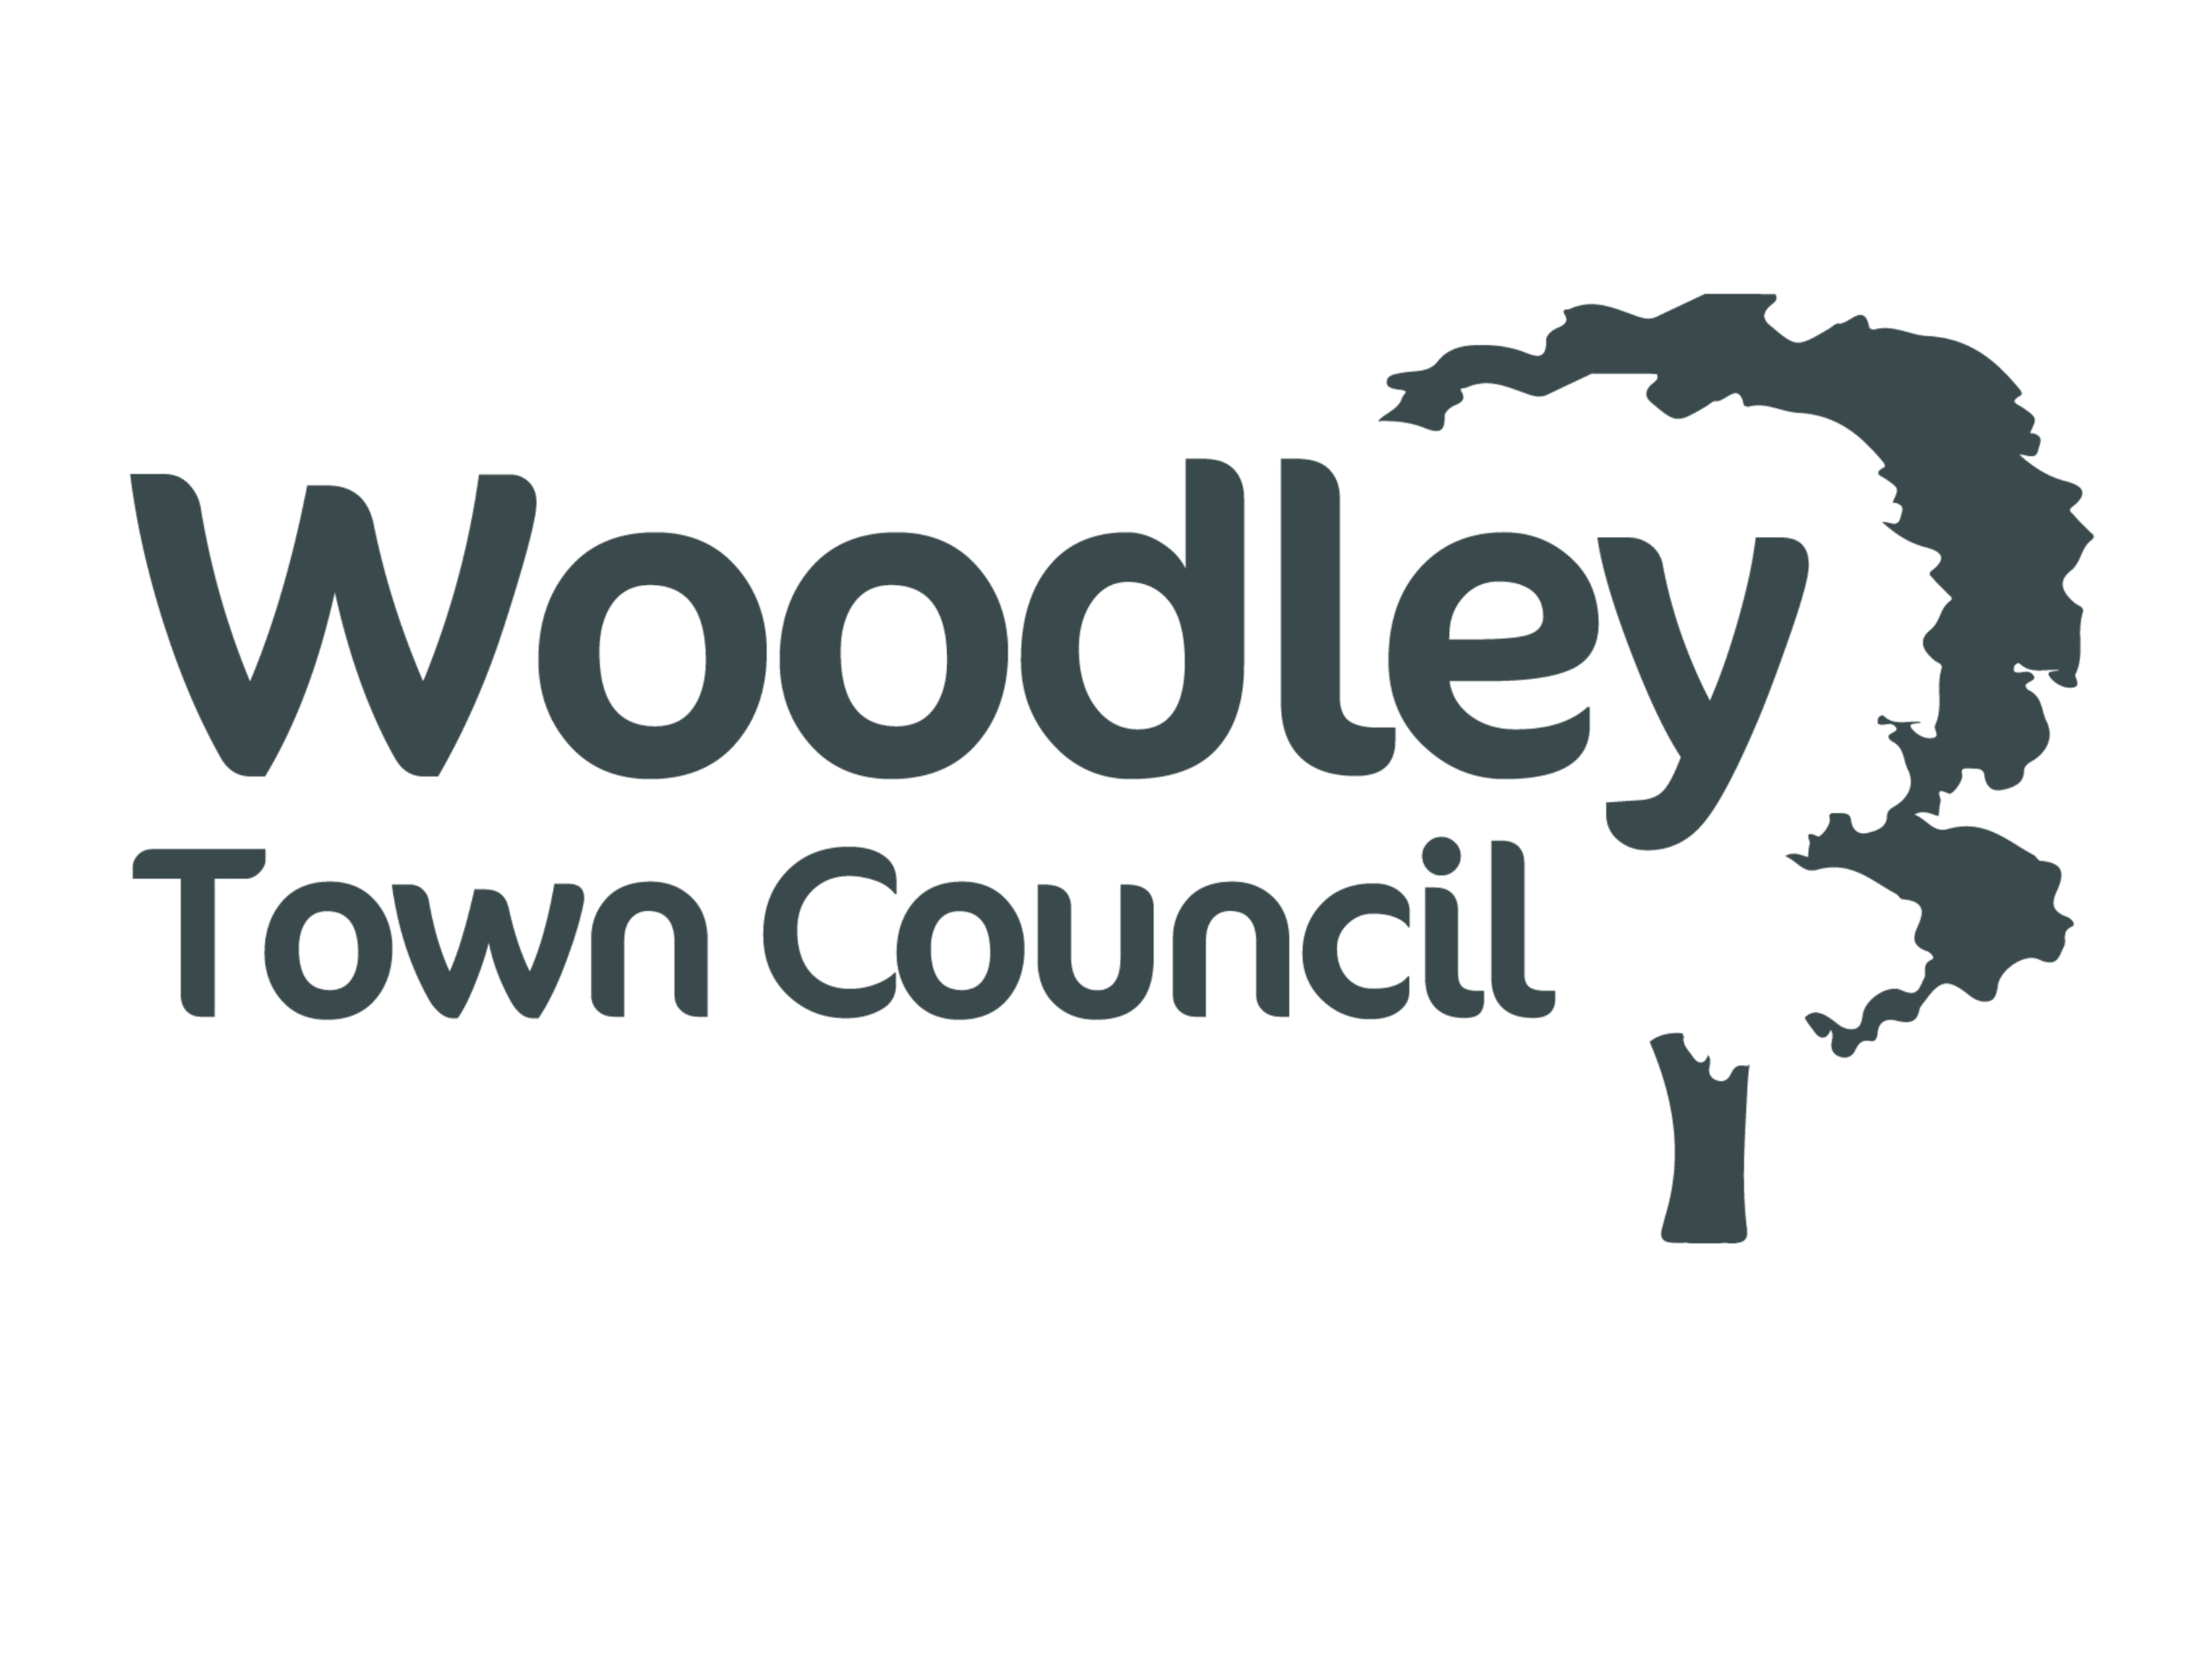 Woodley Town Council logo